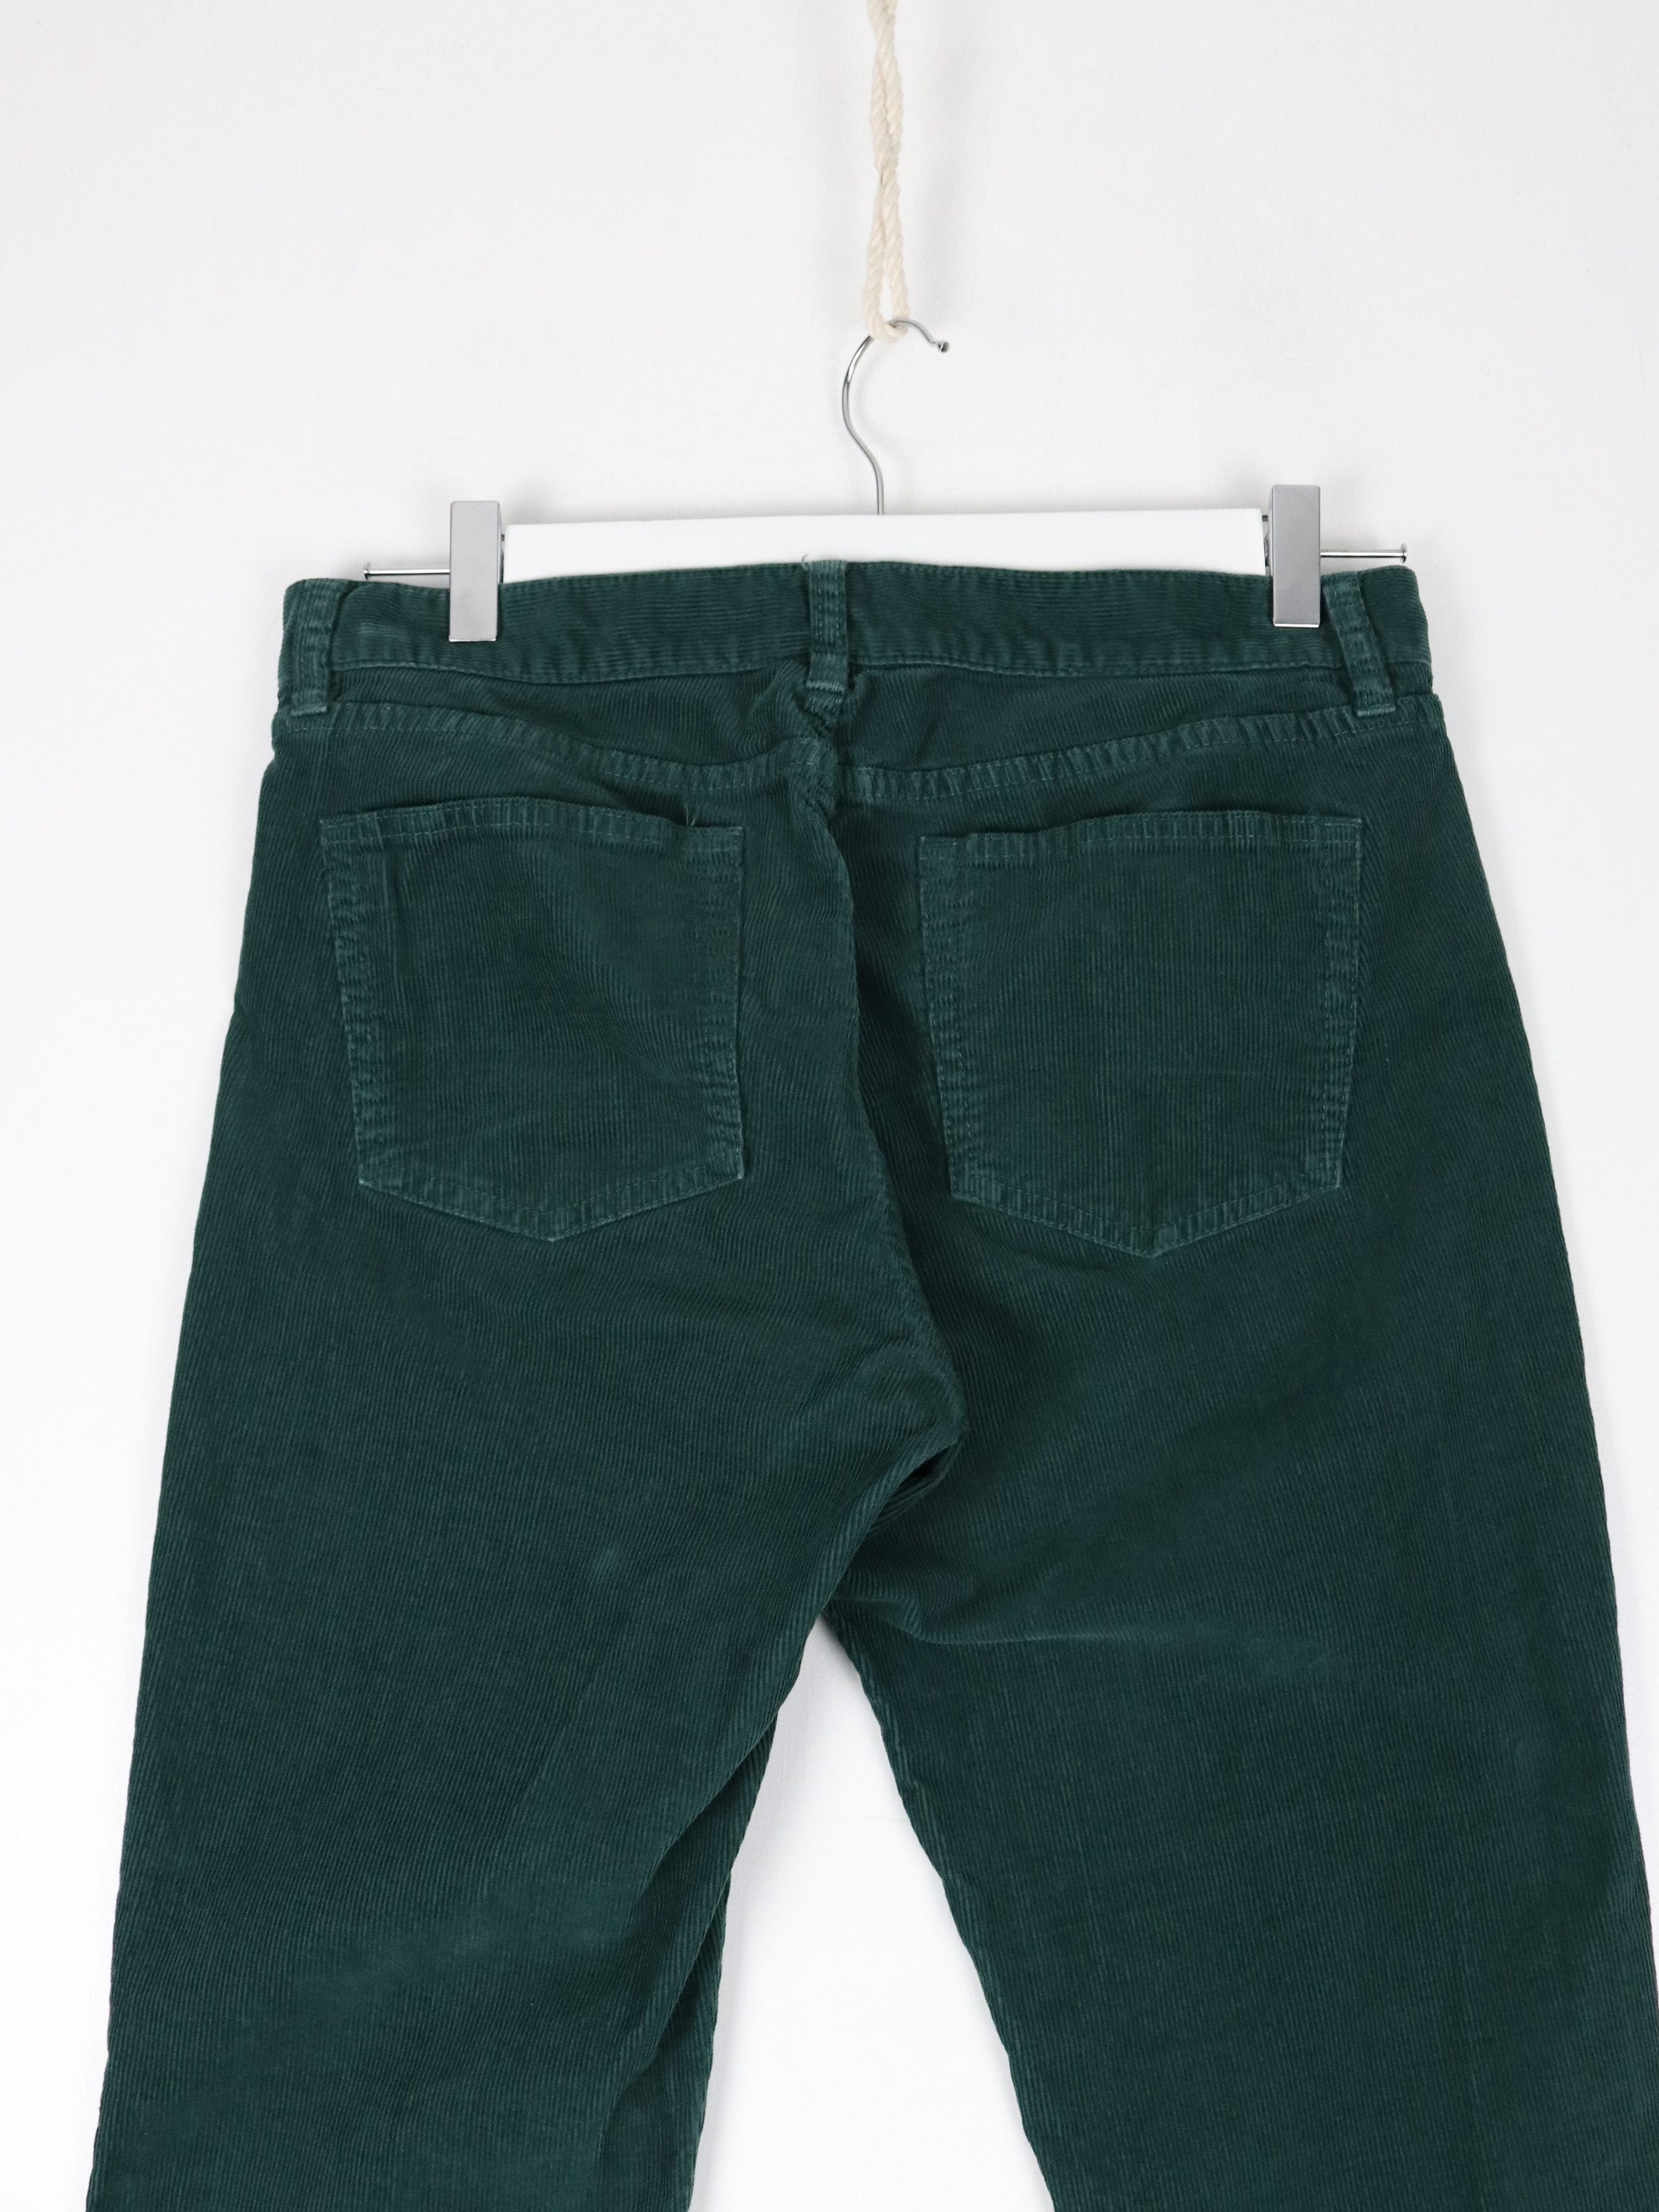 J. Crew Pants Fits Womens 30 x 29 Green Corduroy Trousers – Proper